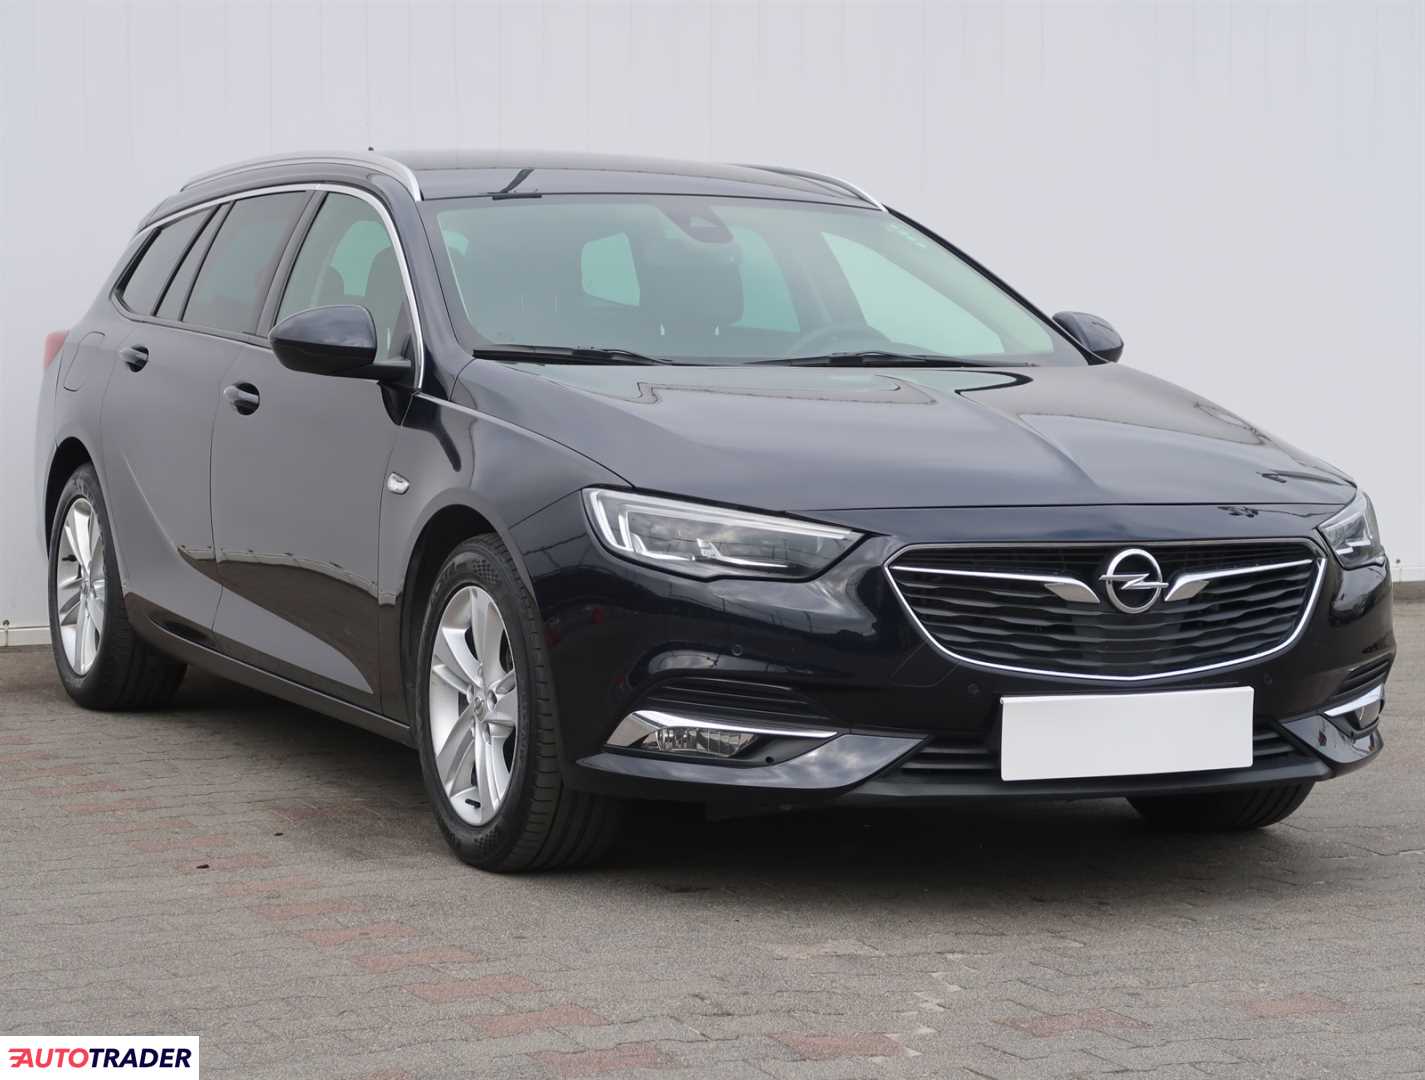 Opel Insignia 2018 2.0 167 KM